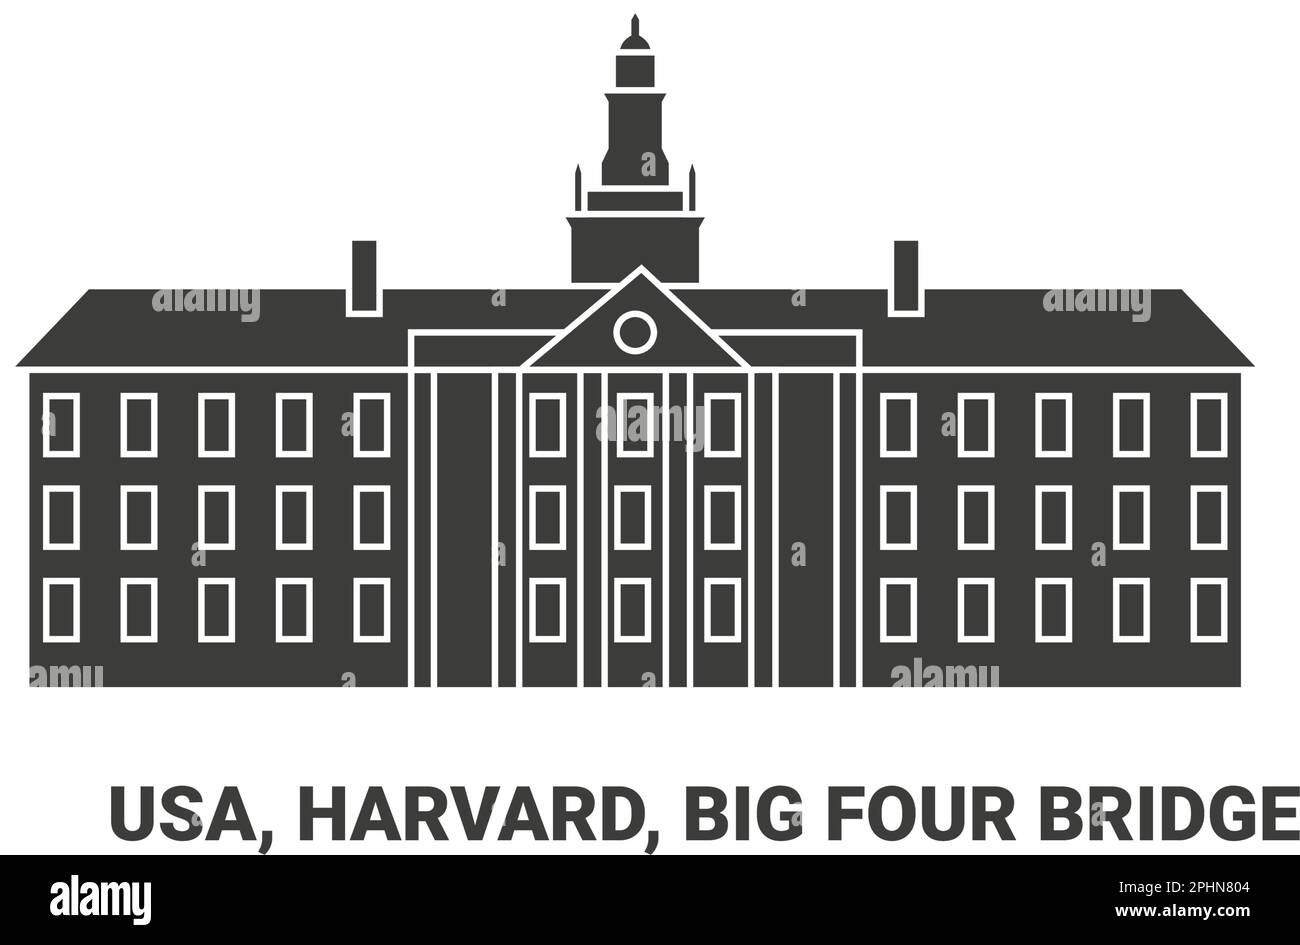 USA, Harvard, Big Four Bridge, Reise-Landmarke-Vektordarstellung Stock Vektor